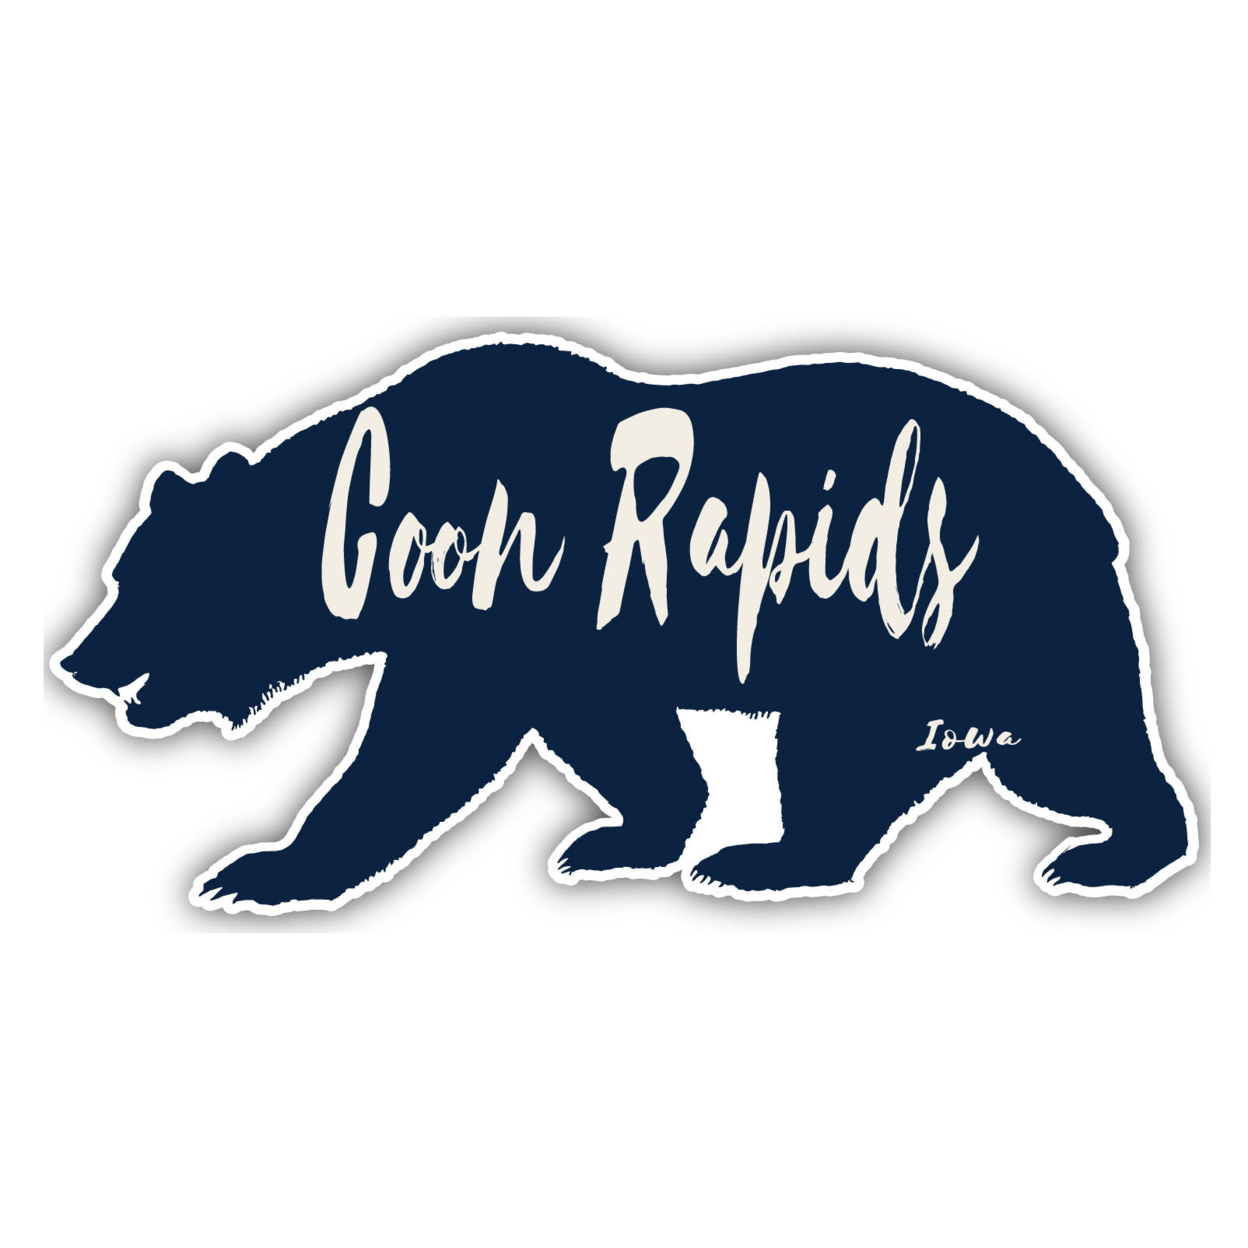 Coon Rapids Iowa Souvenir Decorative Stickers (Choose Theme And Size) - Single Unit, 10-Inch, Bear